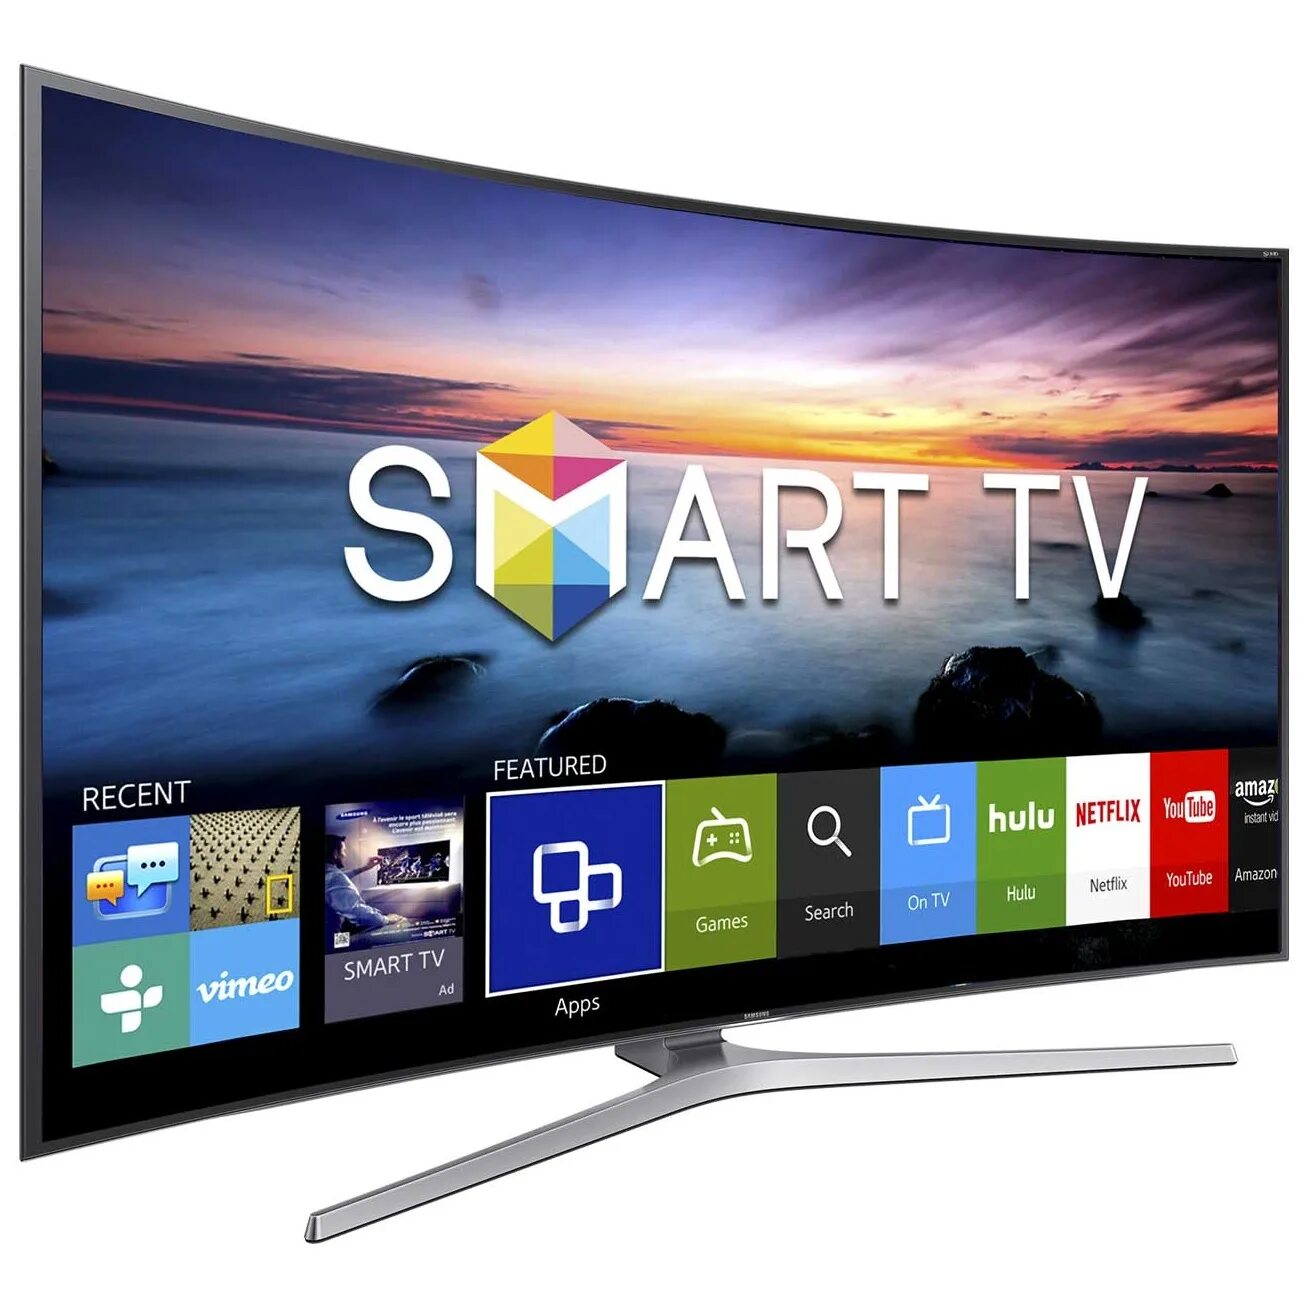 Смат тв. Samsung Smart TV. Телевизор самсунг смарт ТВ. Телевизор самсунг без смарт ТВ. Samsung Smart TV 2016.